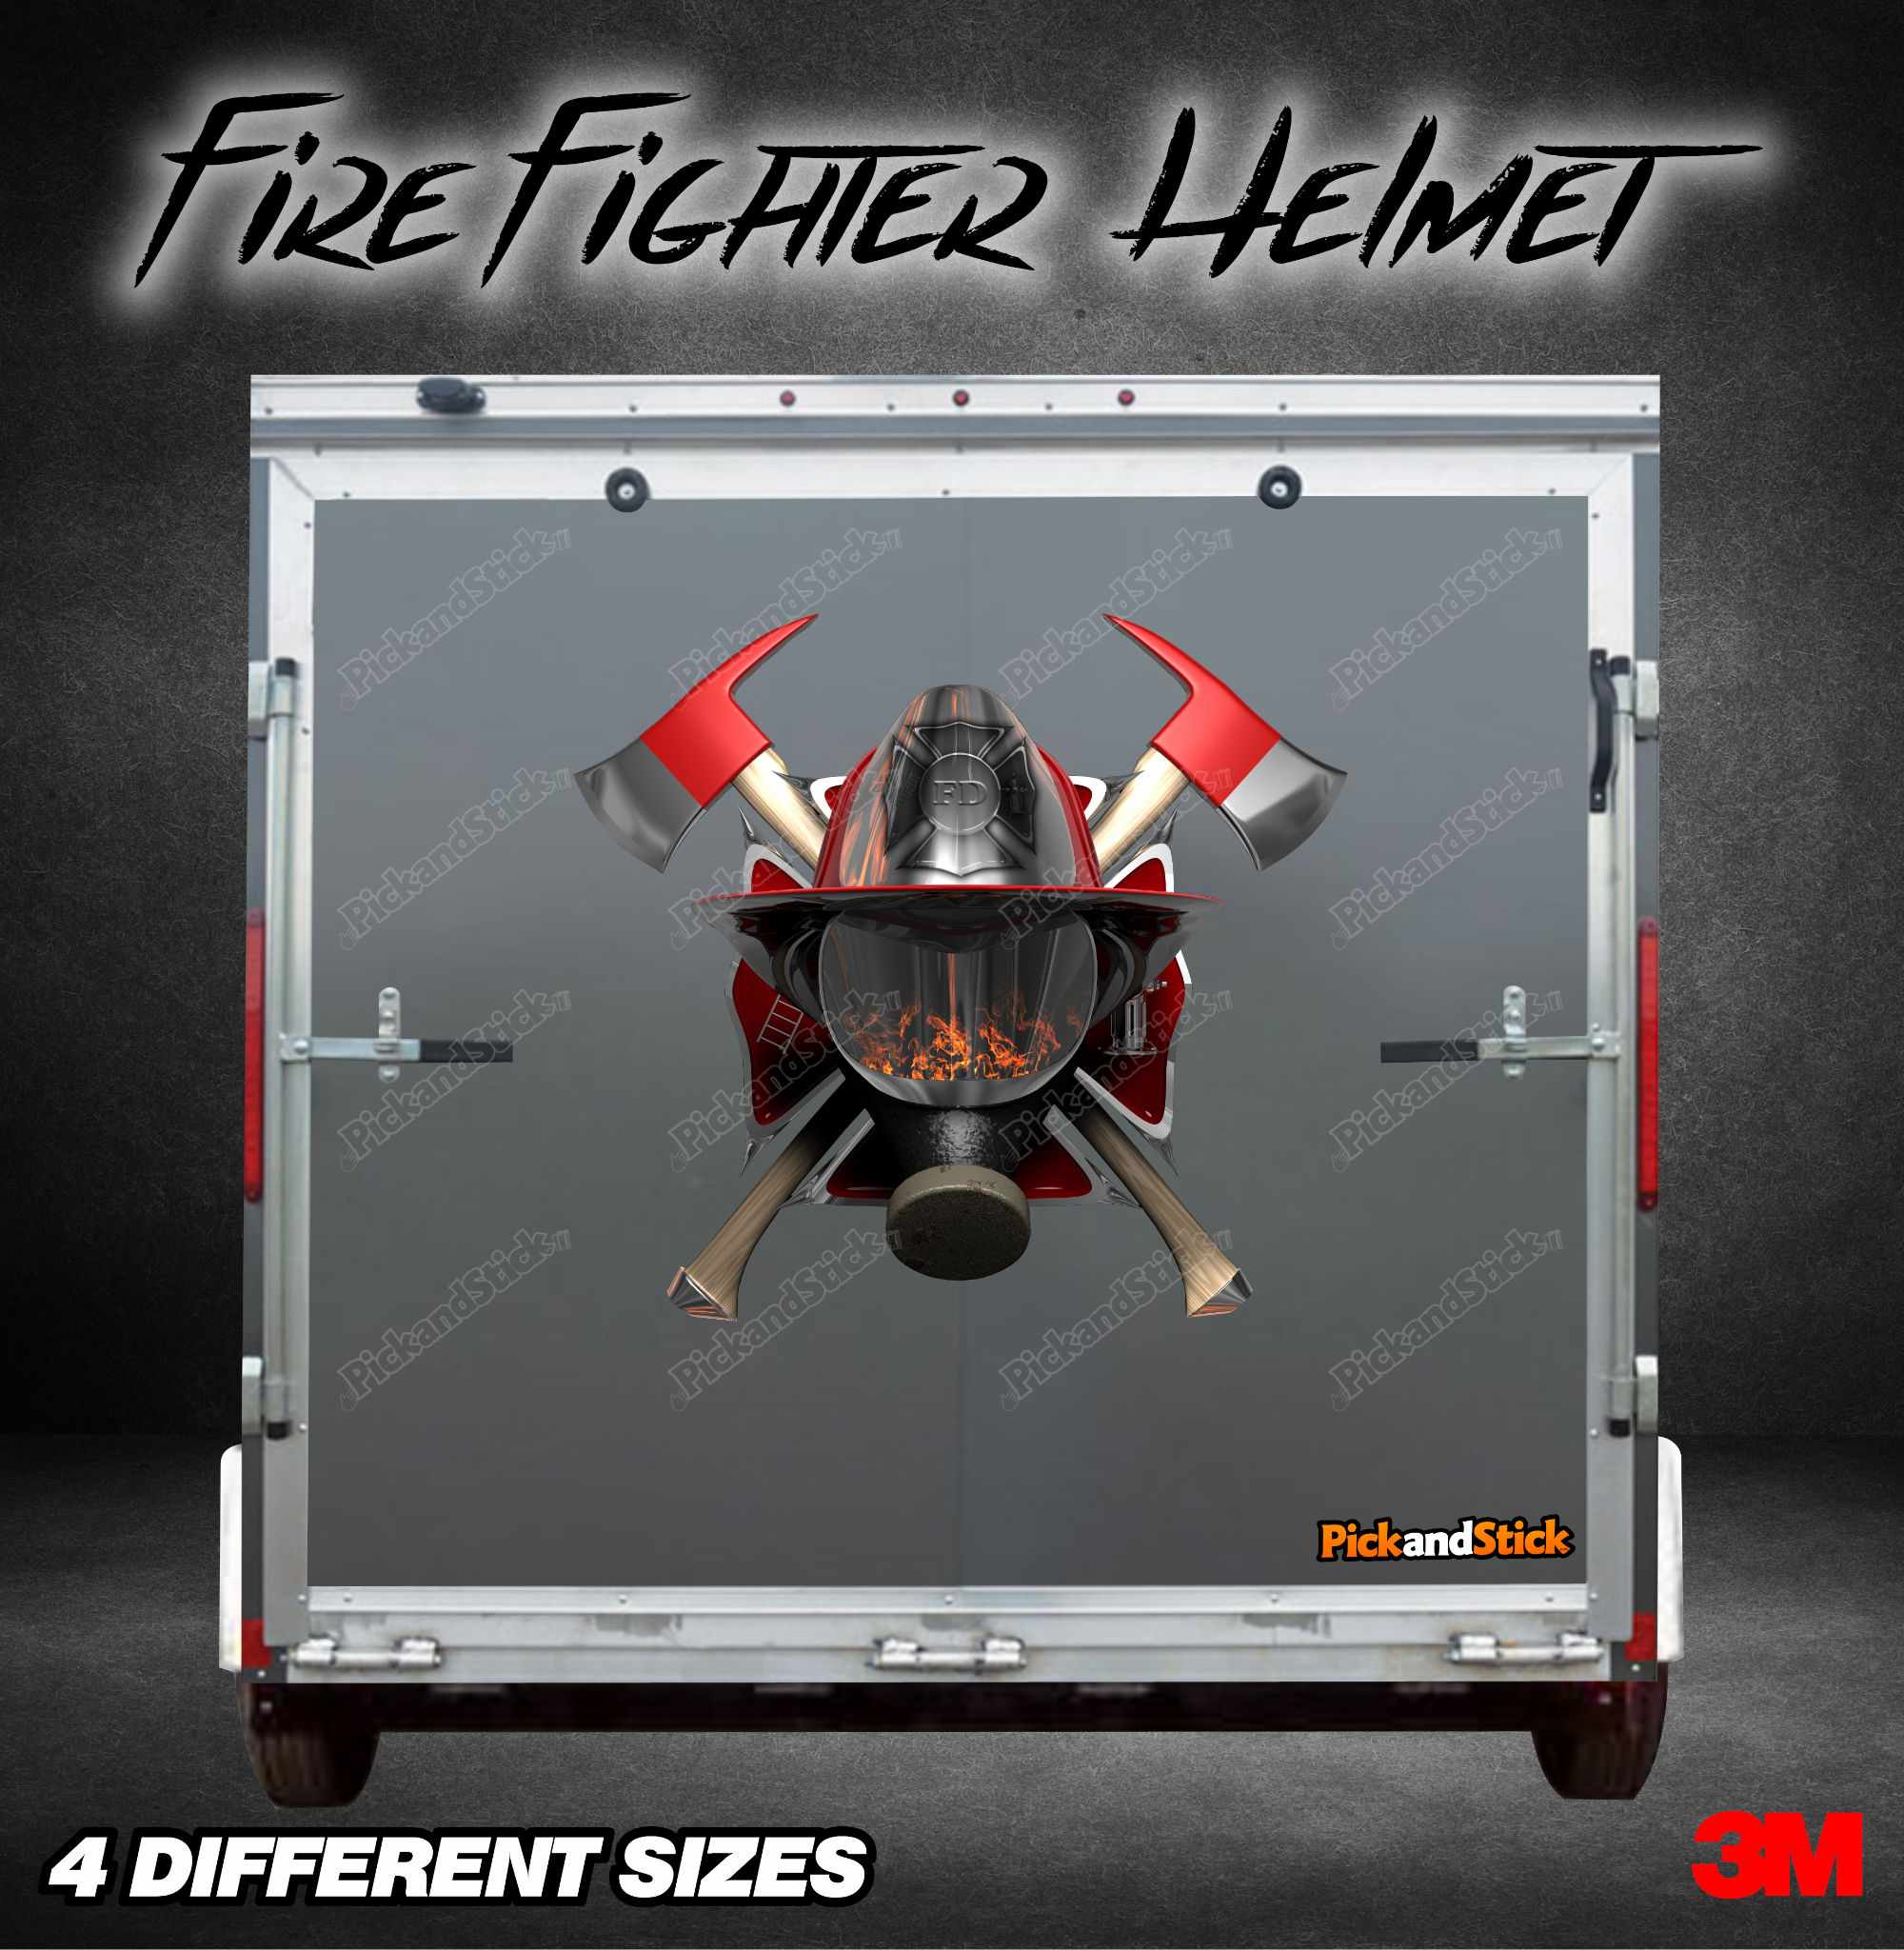 Fire Fighter Helmet Graphic - PickandStickcom